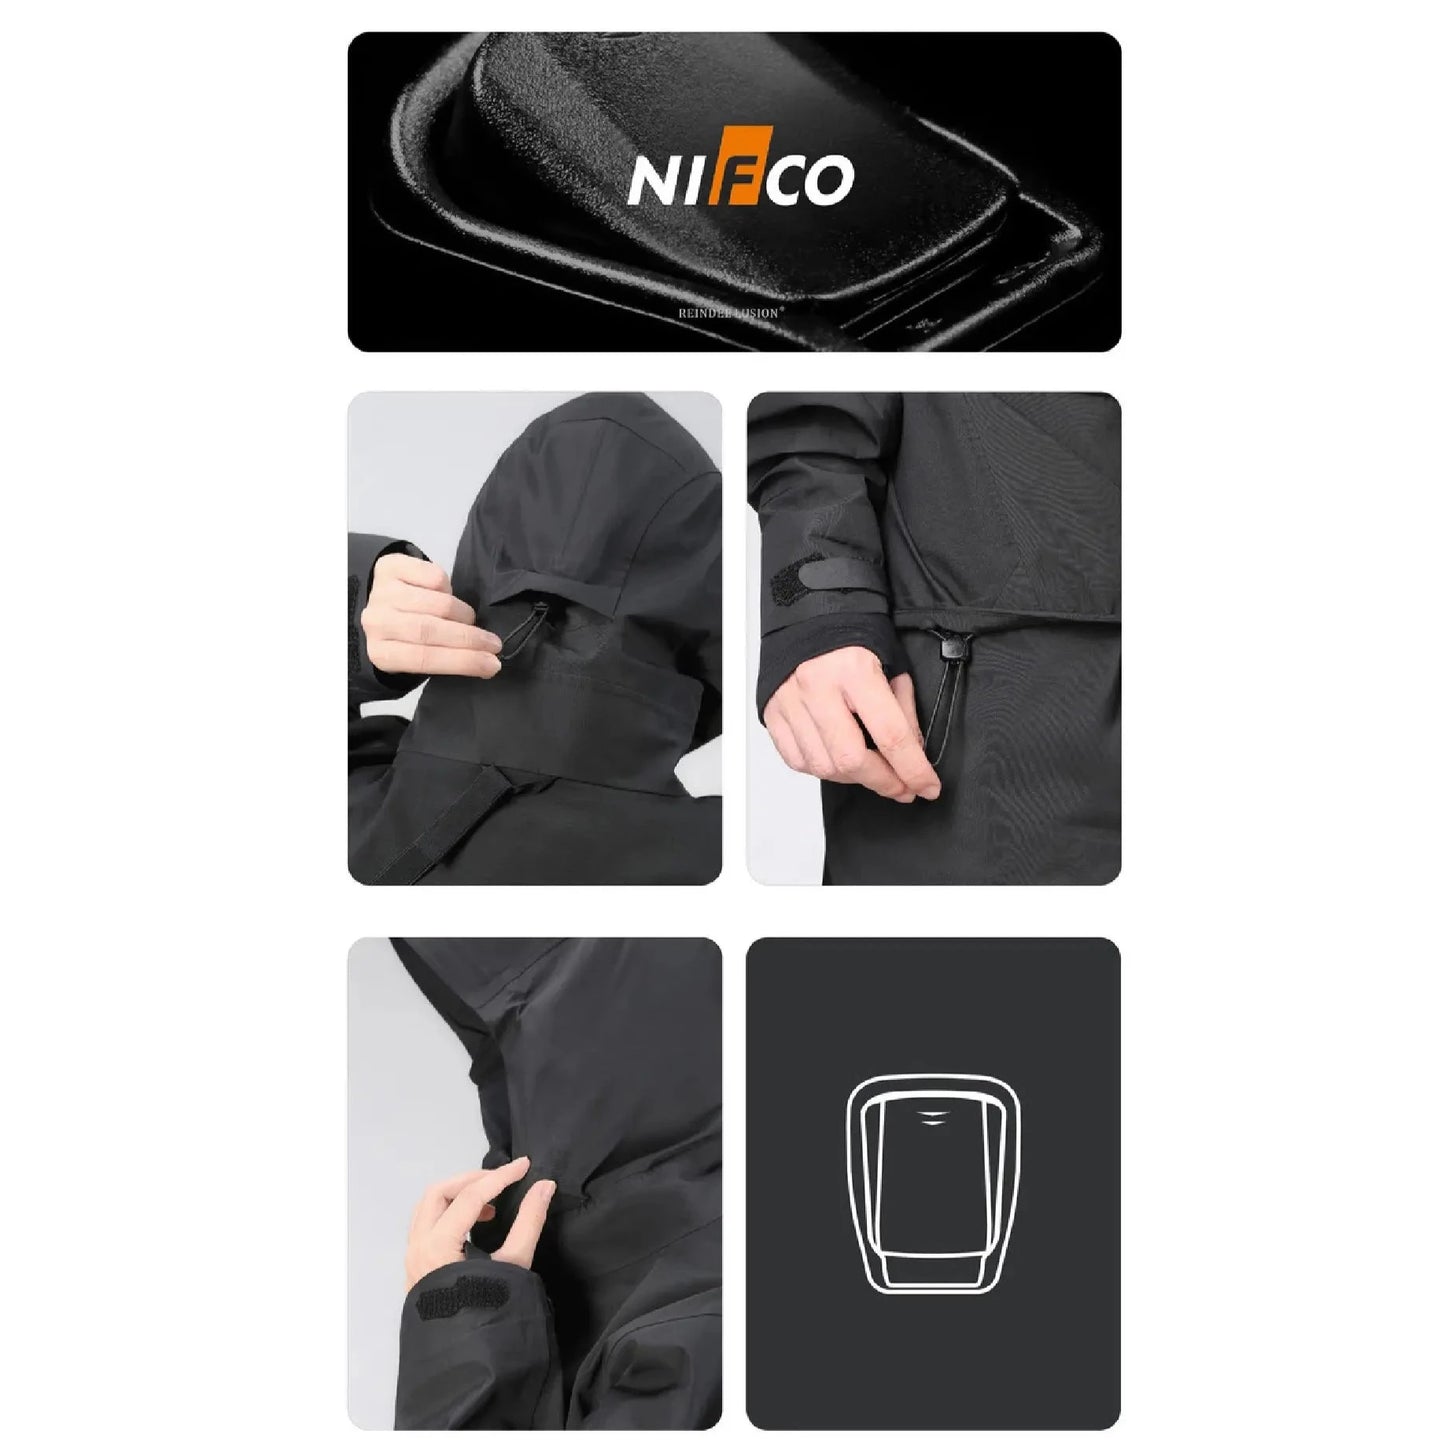 NIFCO adjuster of The 0107 Ski Down Techwear Jacket in black Color